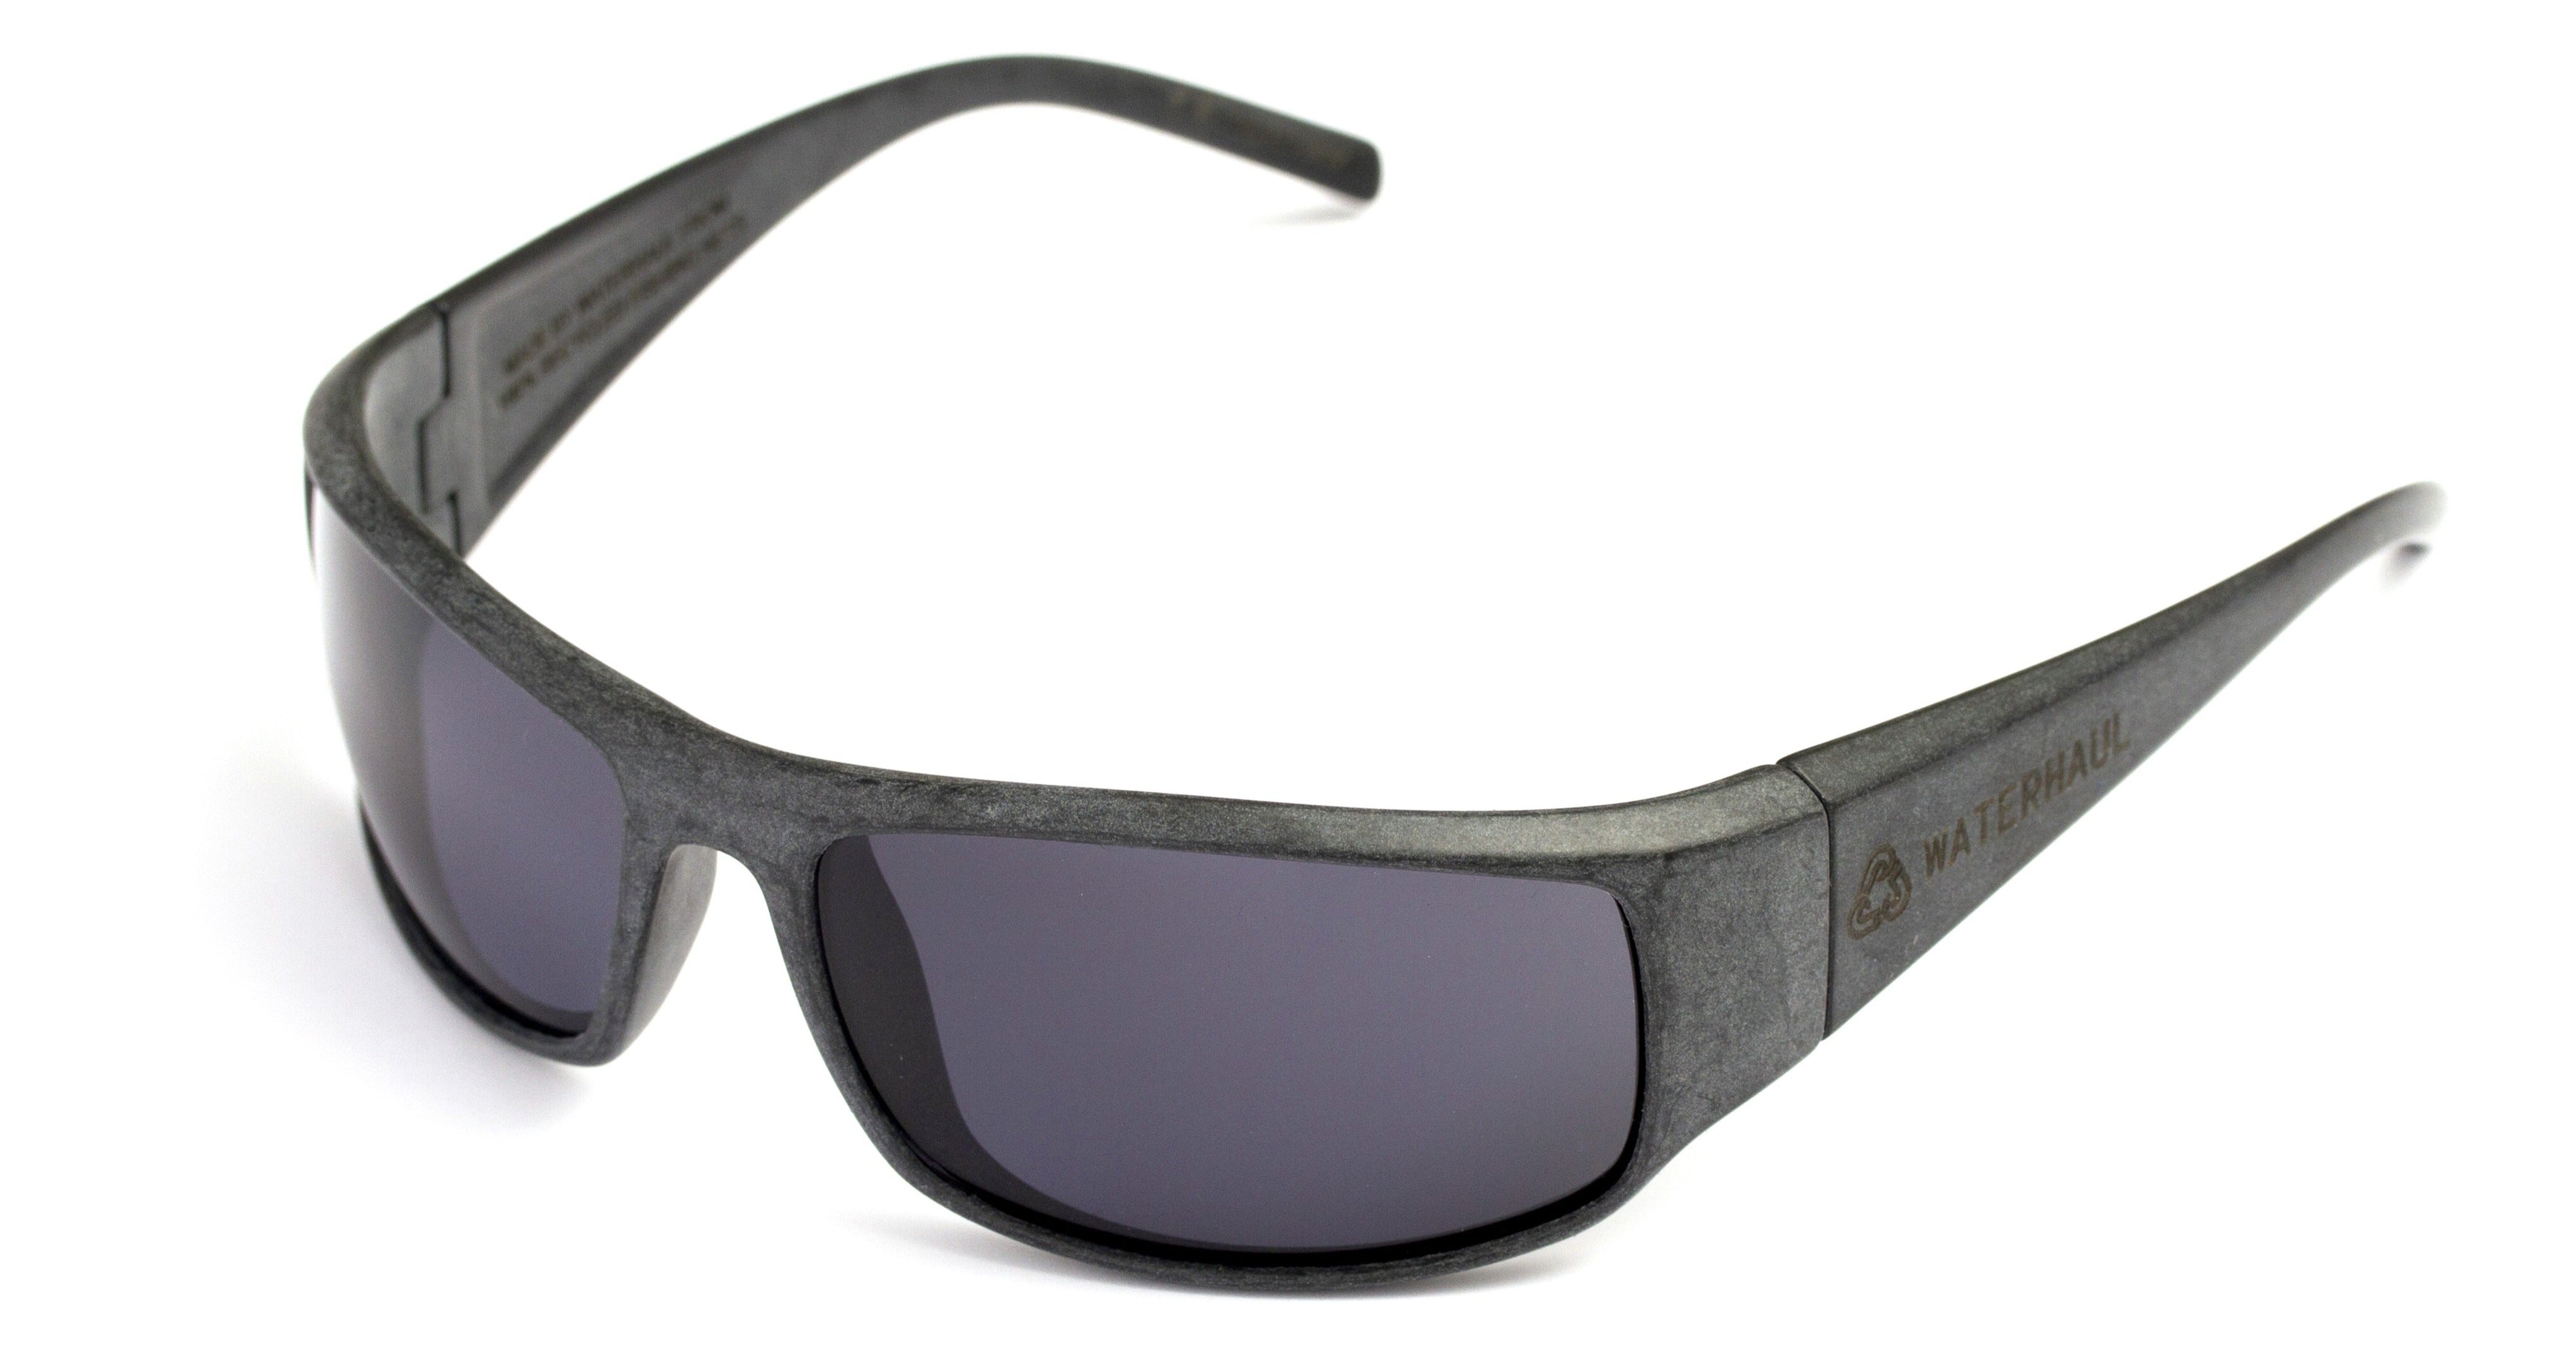 Sunglasses Zennor (Black / Grey)